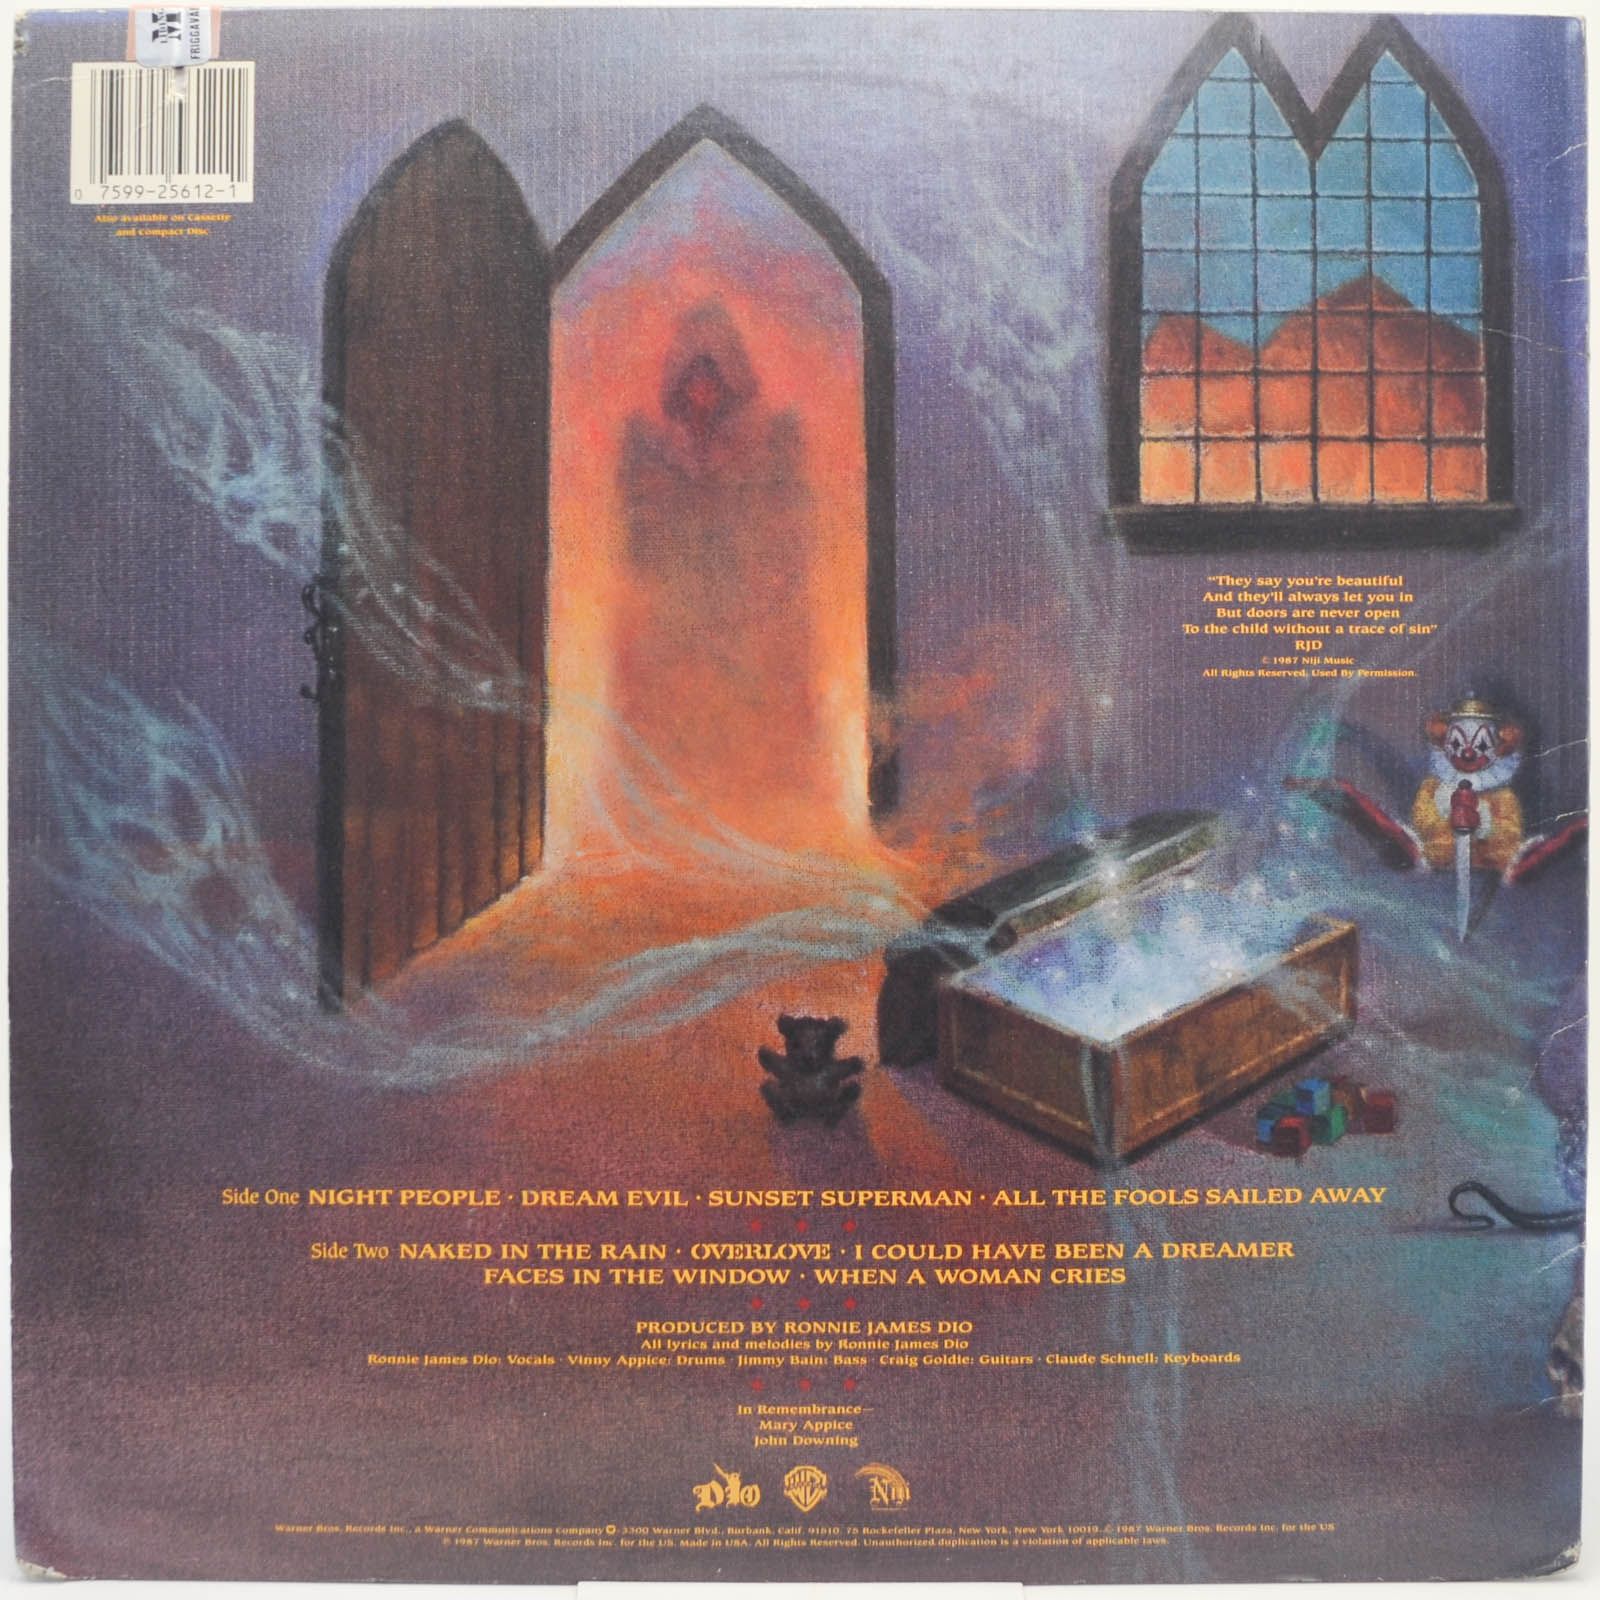 Dio — Dream Evil (USA), 1987